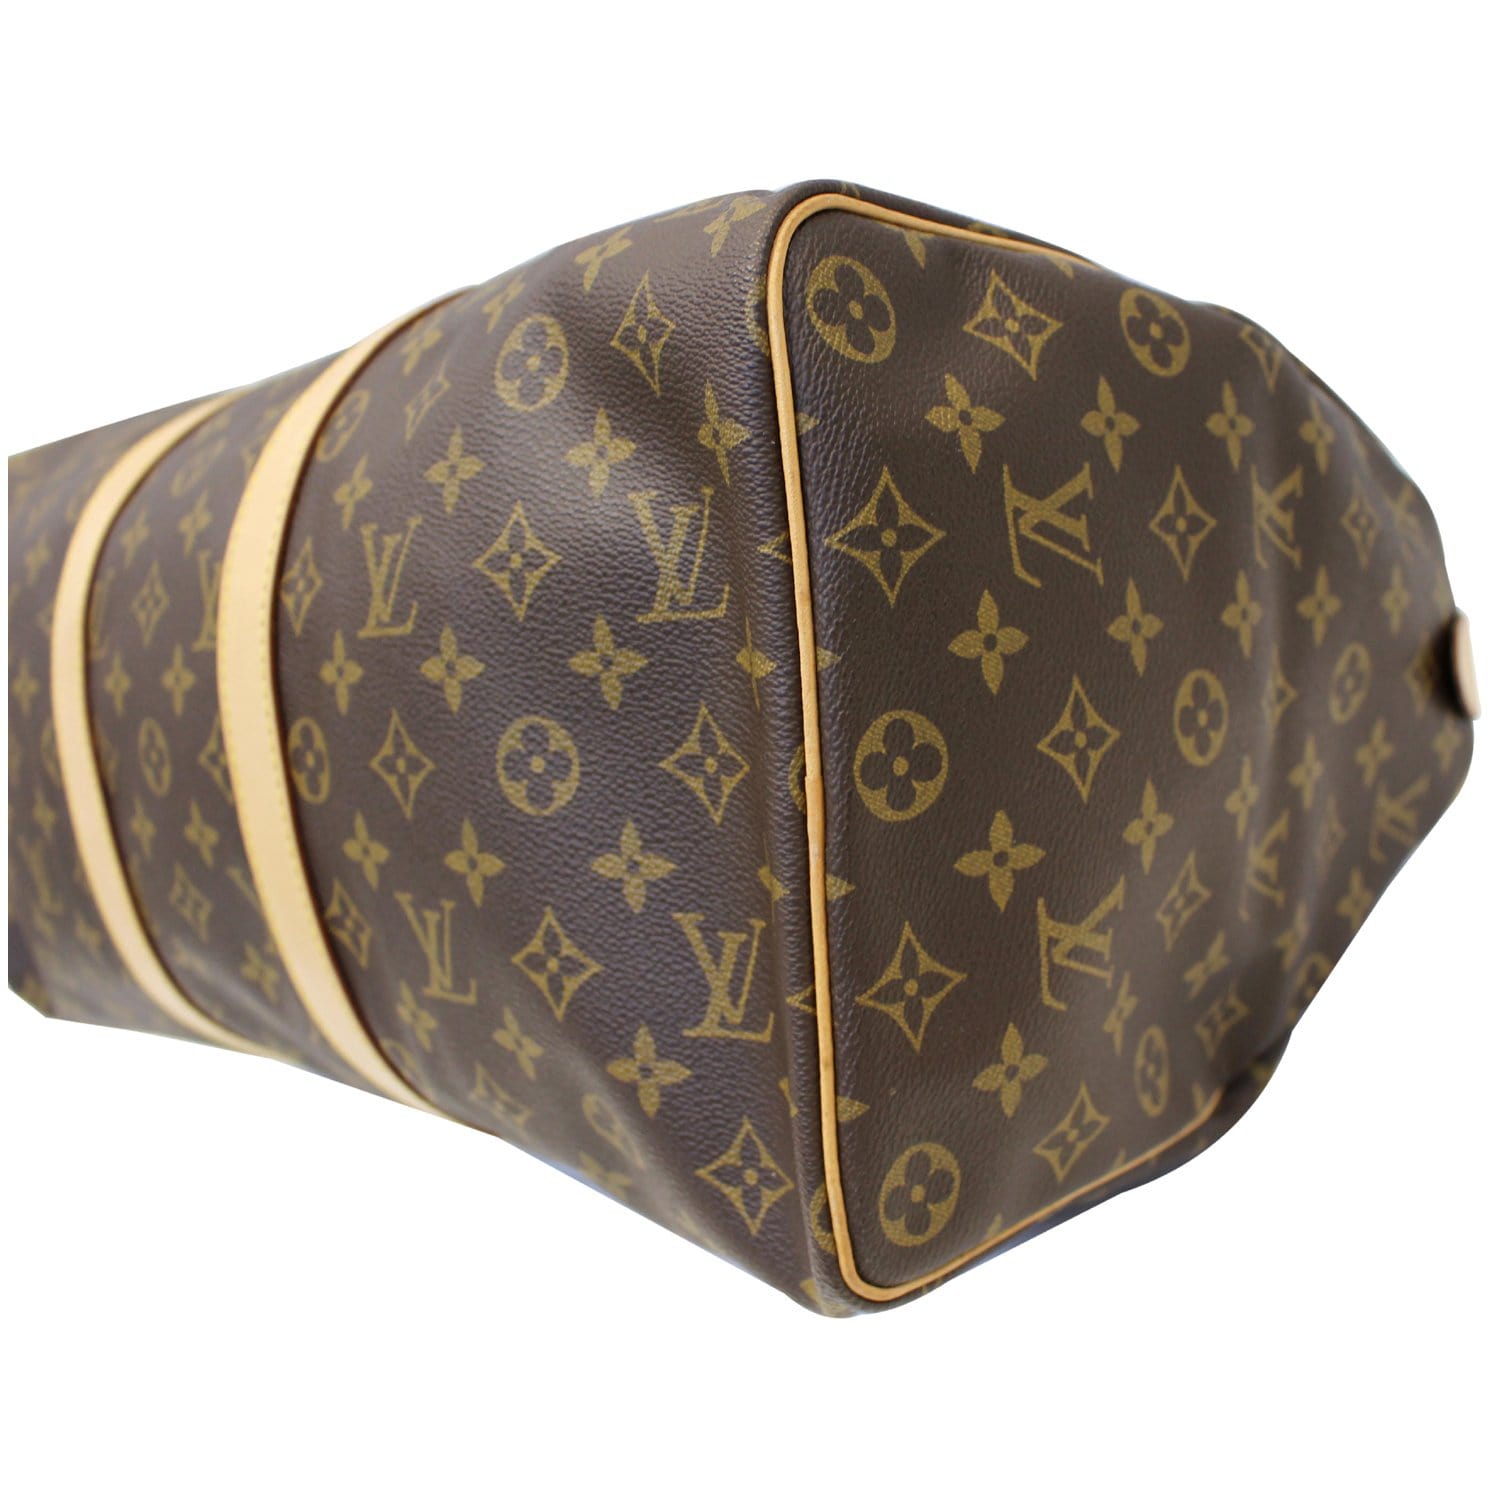 Louis Vuitton Keepall  Louis vuitton travel bags, Louis vuitton duffle bag,  Louis bag